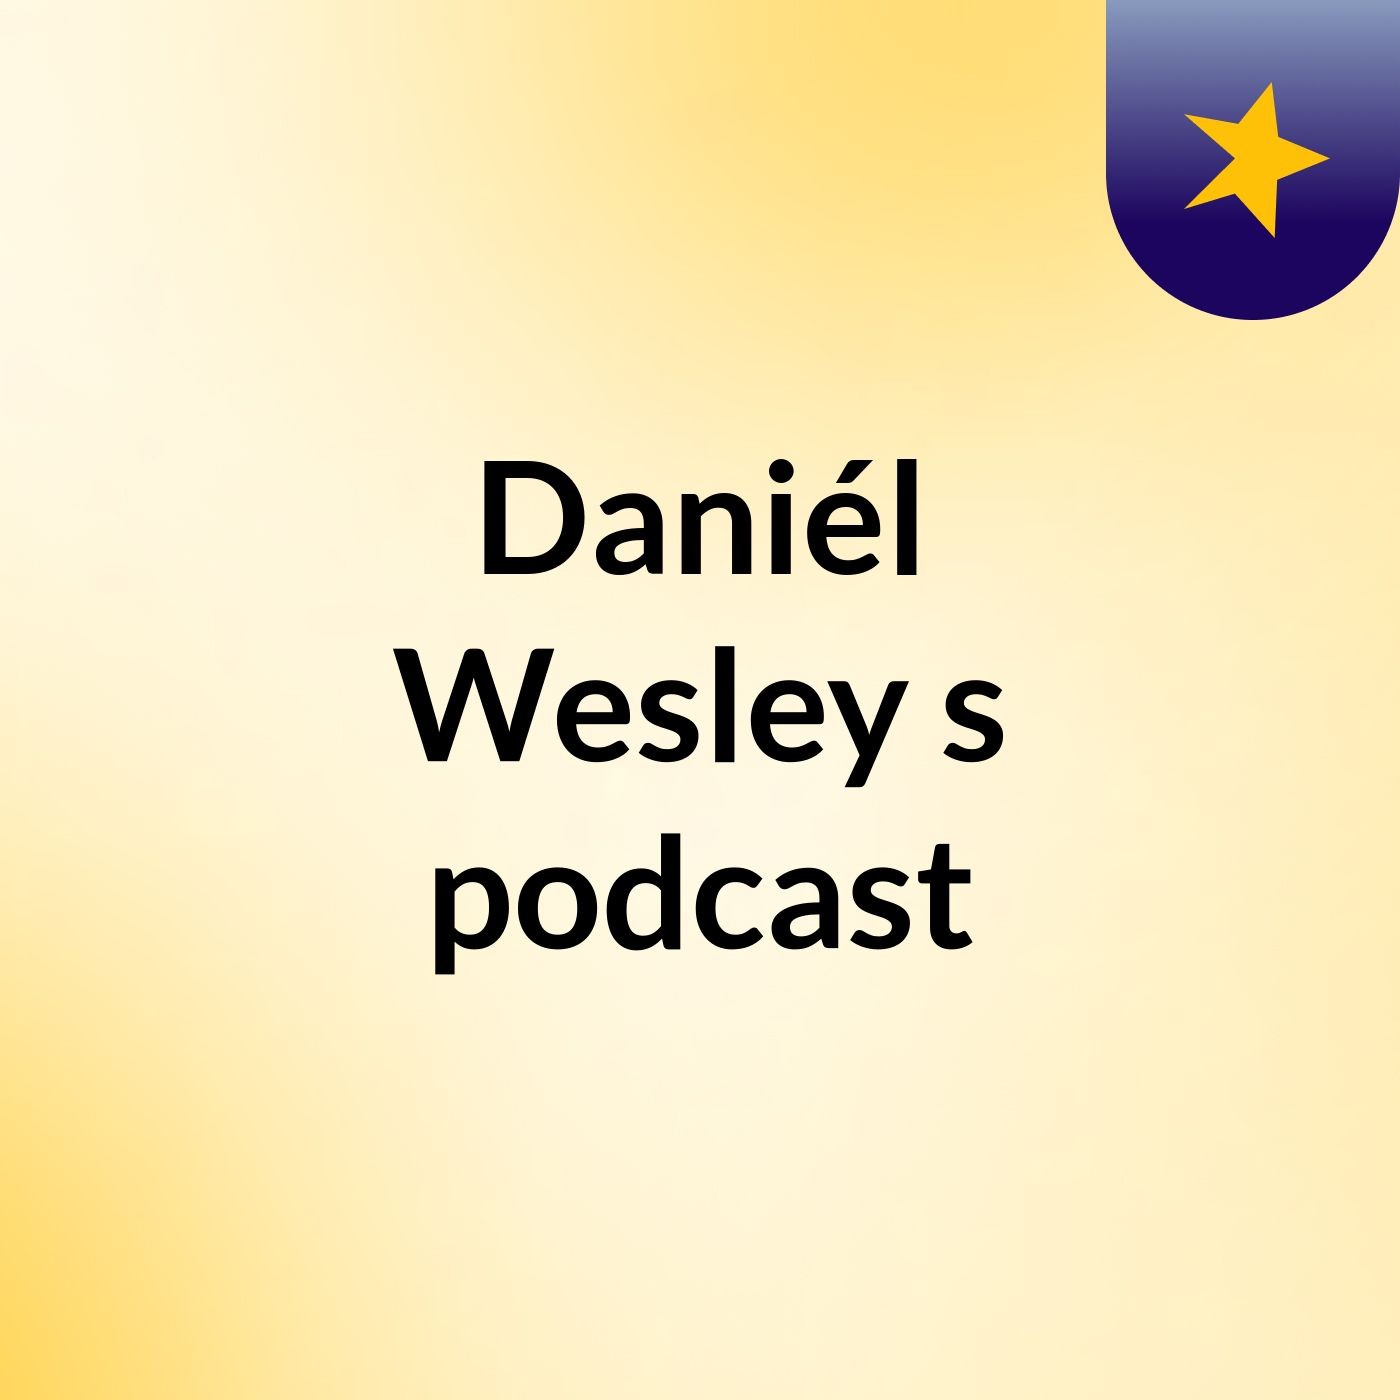 Episode 17 - Daniél Wesley's podcast